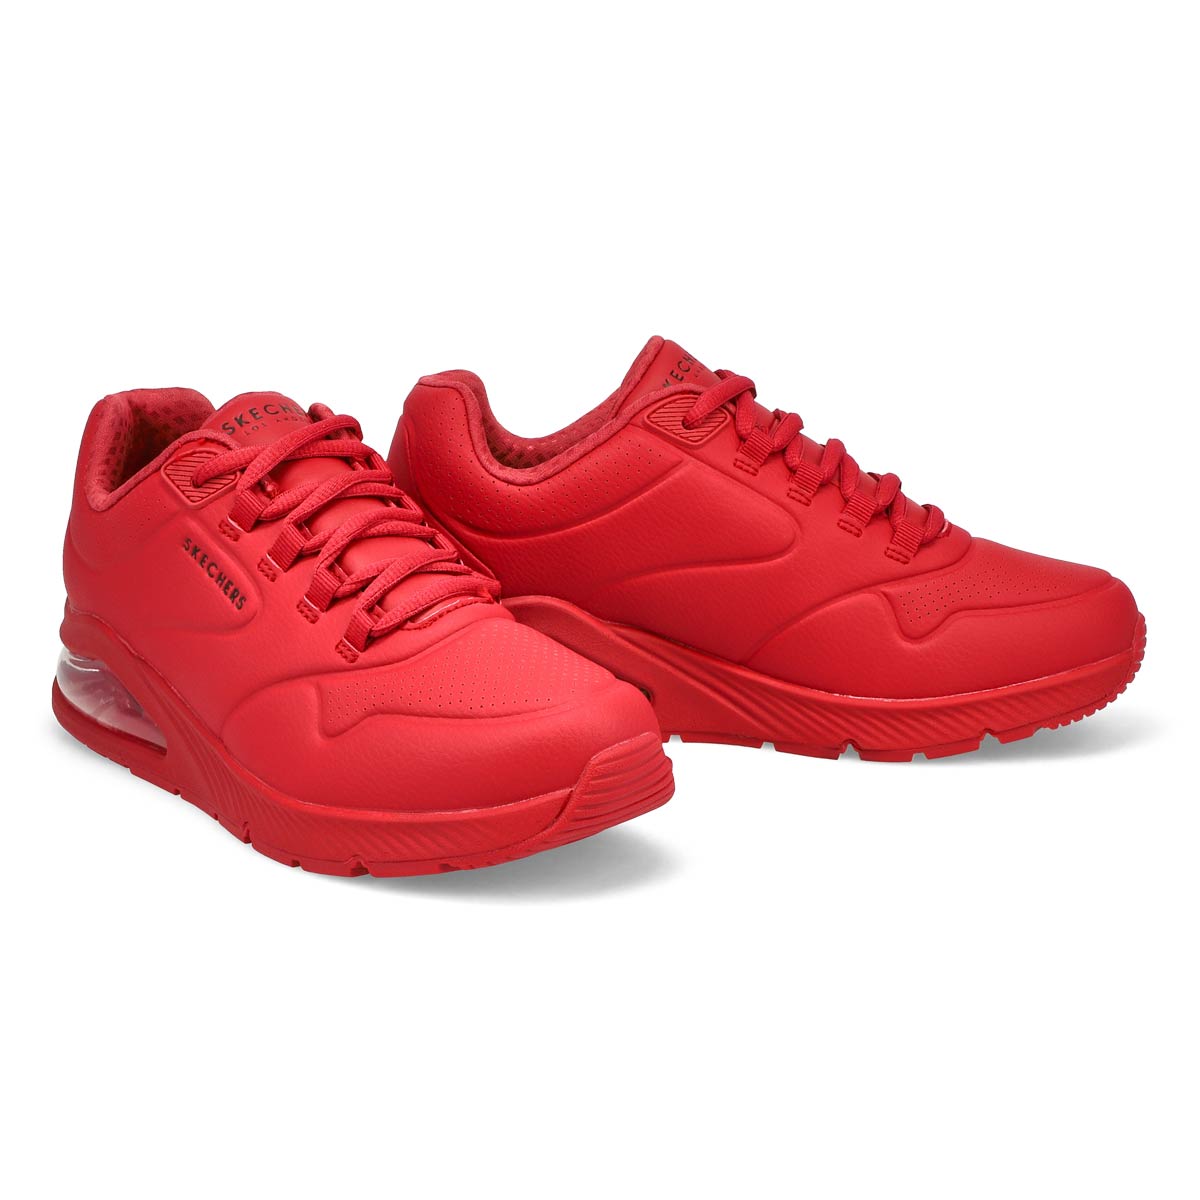 Women's Uno2 Air Around You Fashion Sneaker - Red